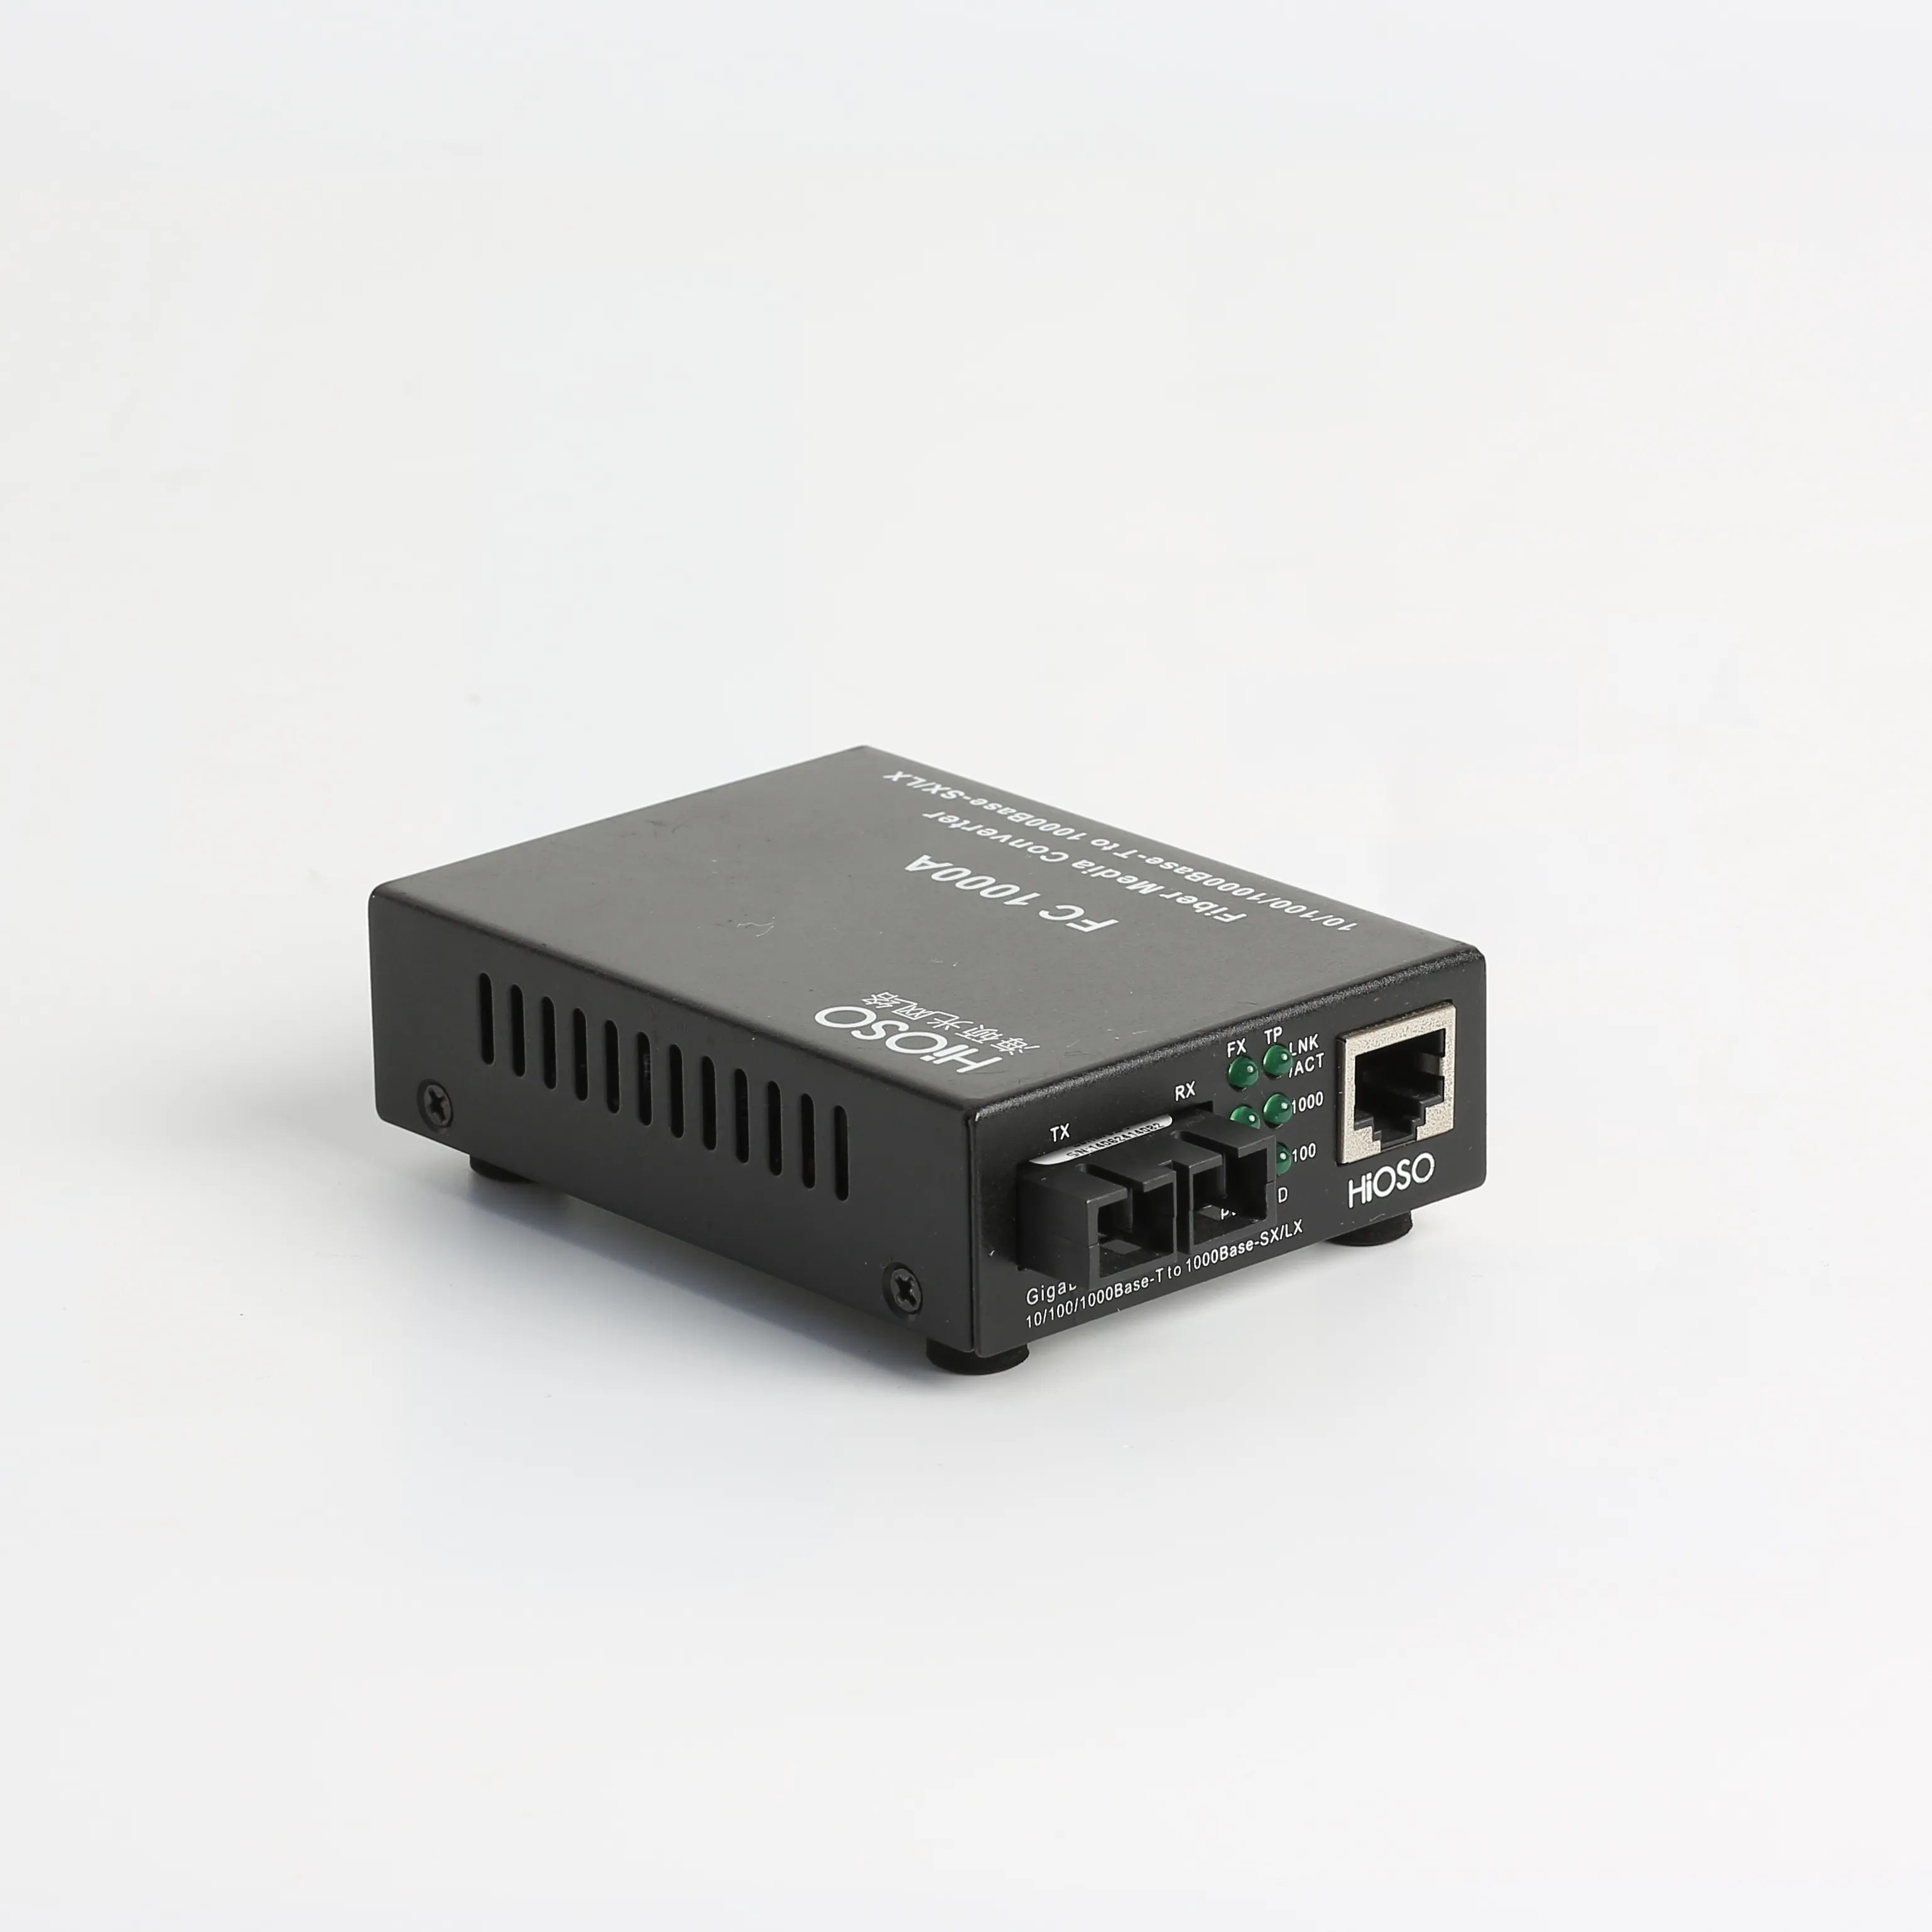 Cable de fibra óptica Gigabit Dual, convertidor de medios personalizado de fábrica de alta calidad, 10/100/1000M, modo único de 20KM a RJ45